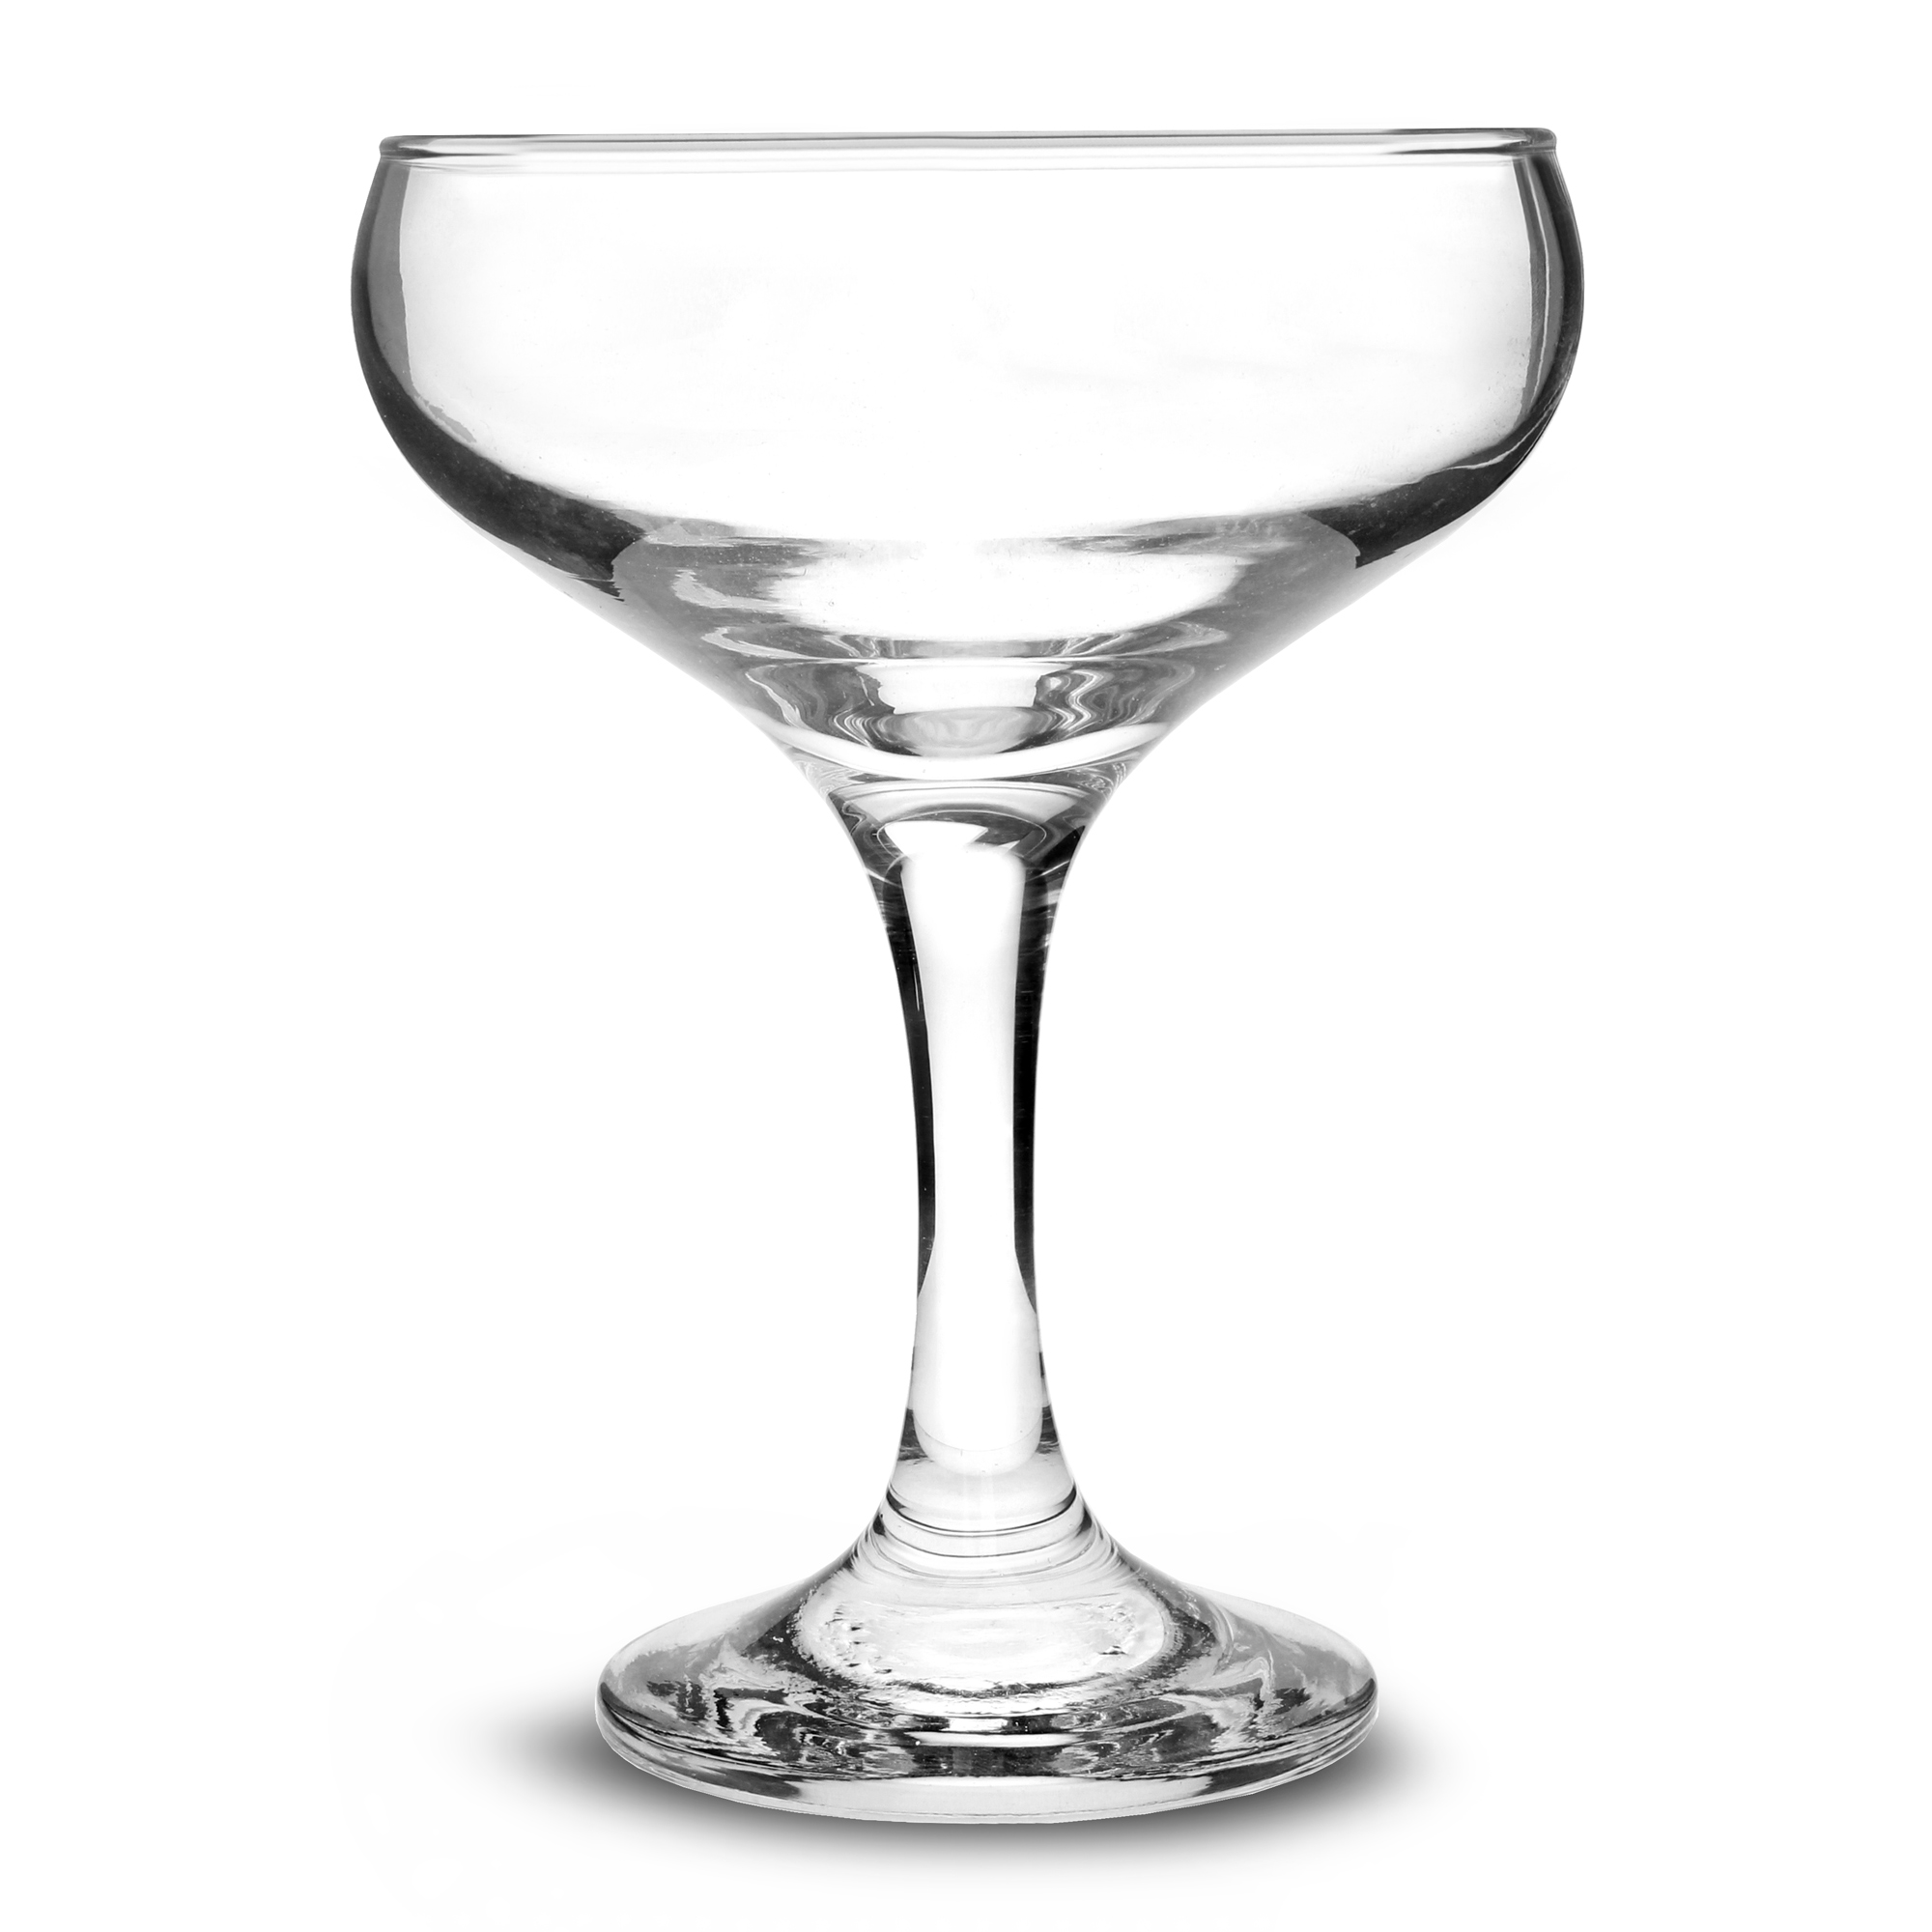 Essence Champagne Coupe Glasses 7oz 200ml Drinkstuff